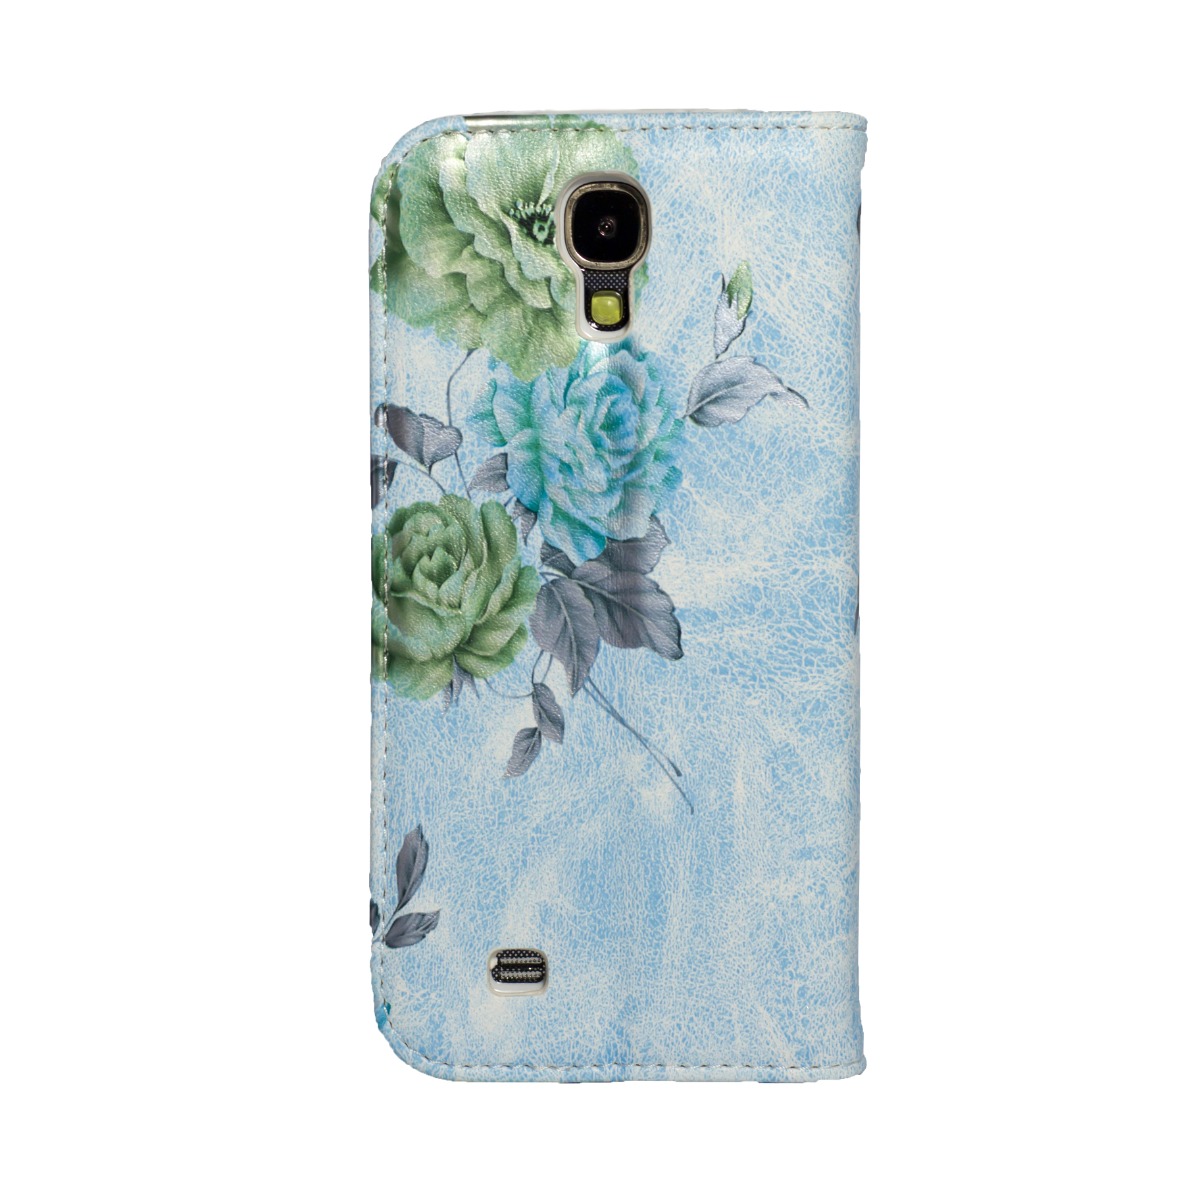 Husa Book Fashion Samsung Galaxy S4, Albastra model flori thumb